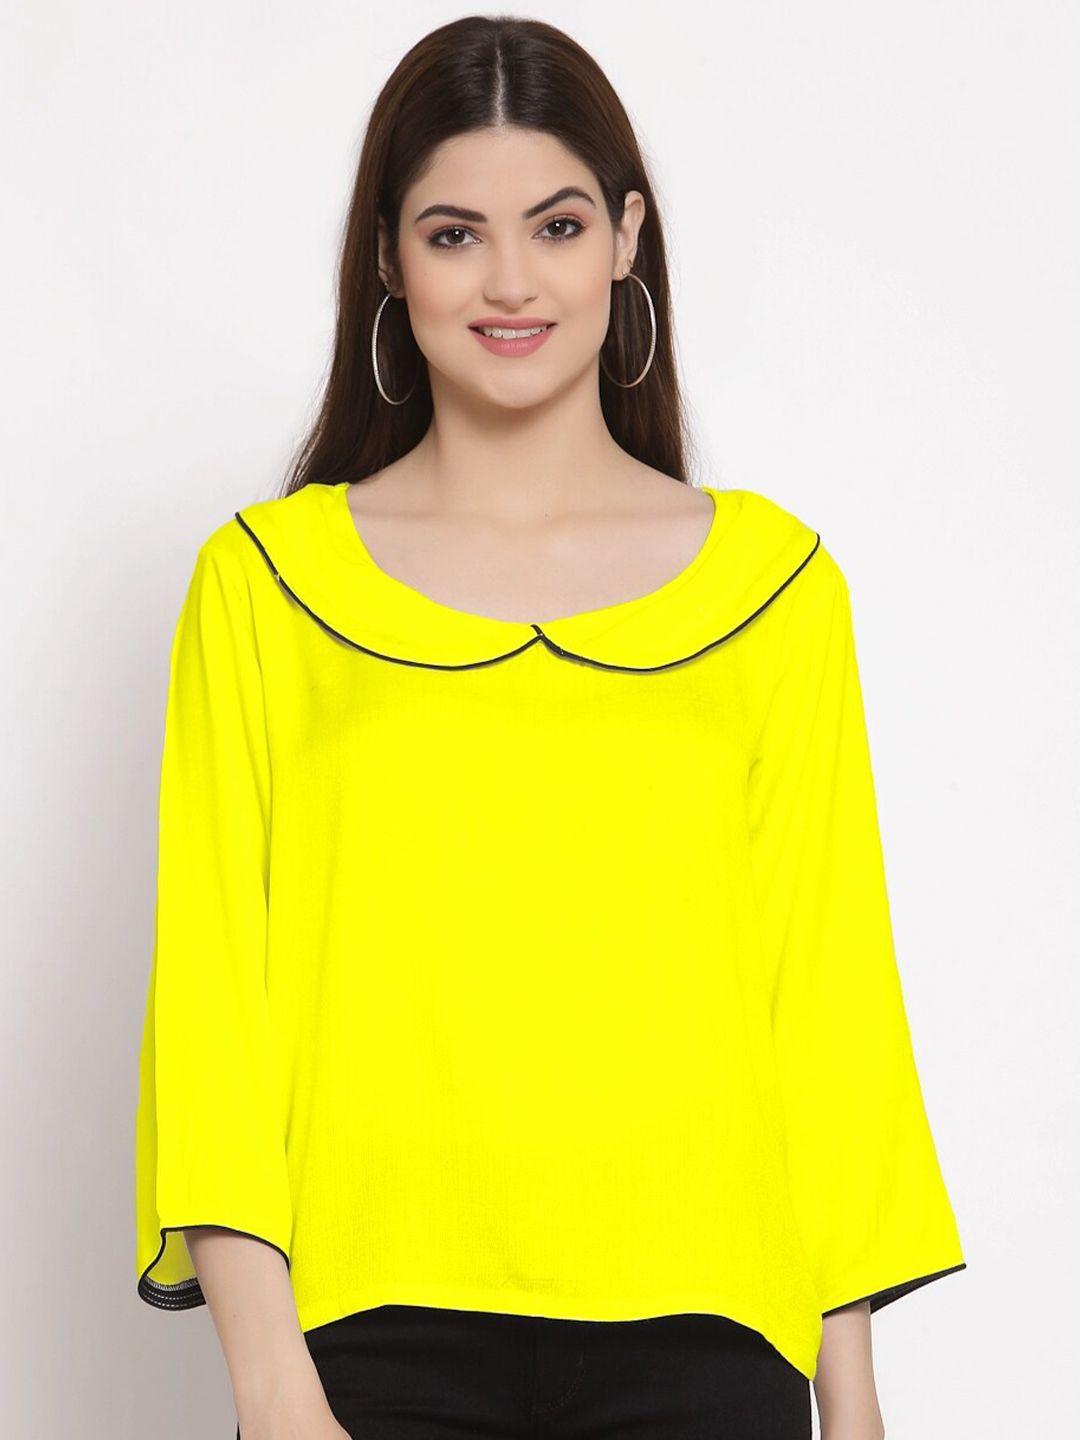 patrorna-women-yellow-solid-top